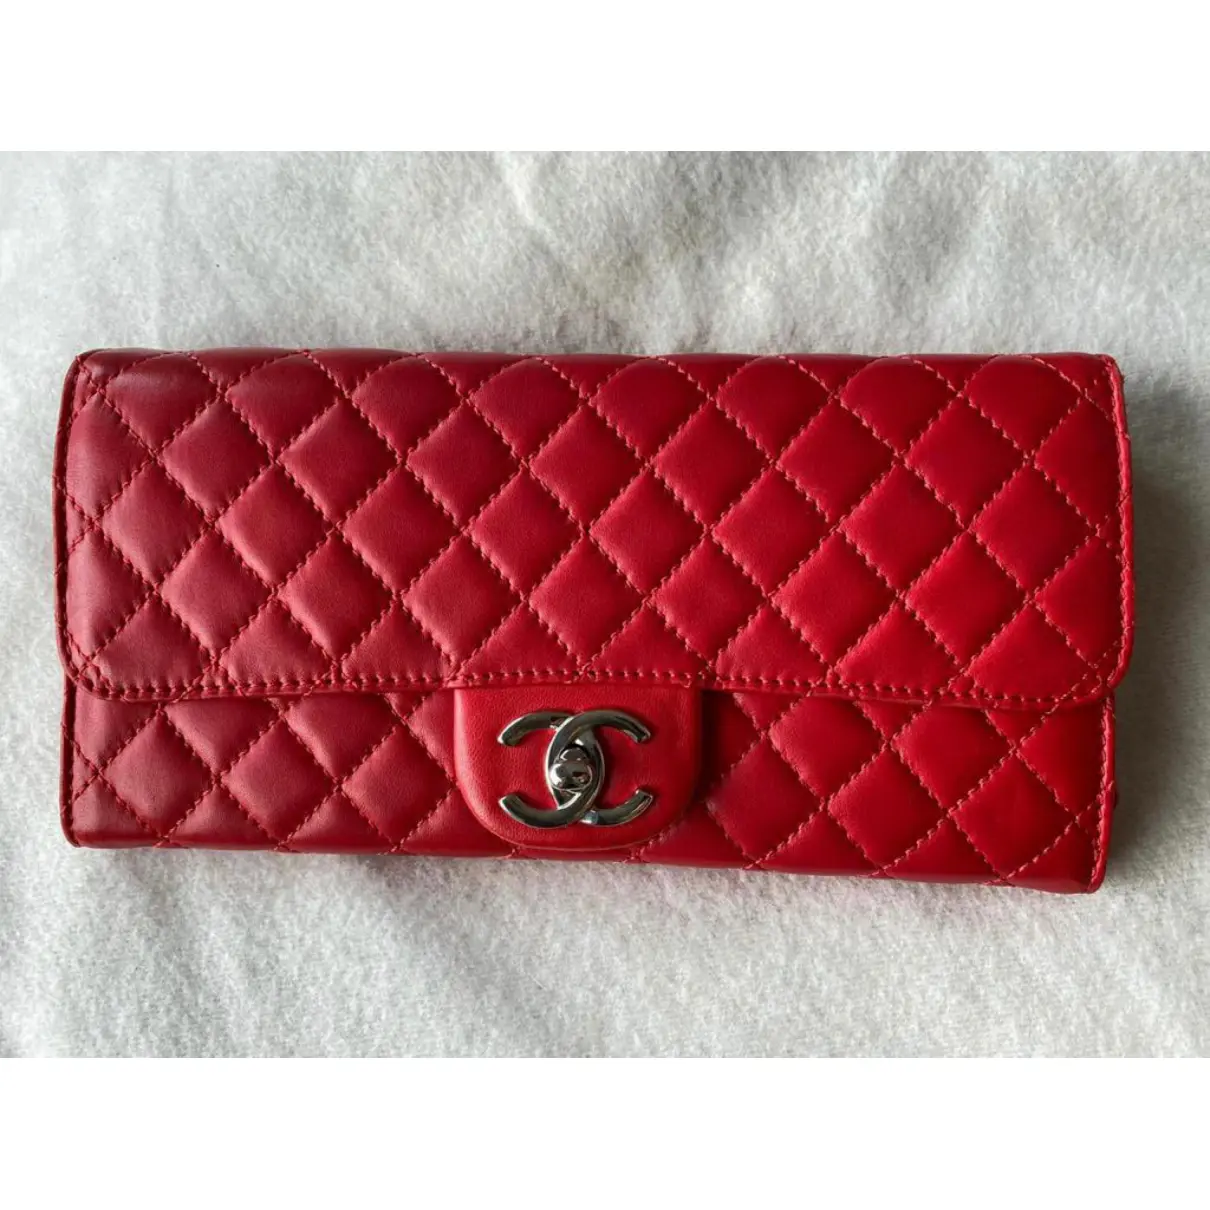 Timeless/Classique leather mini bag Chanel